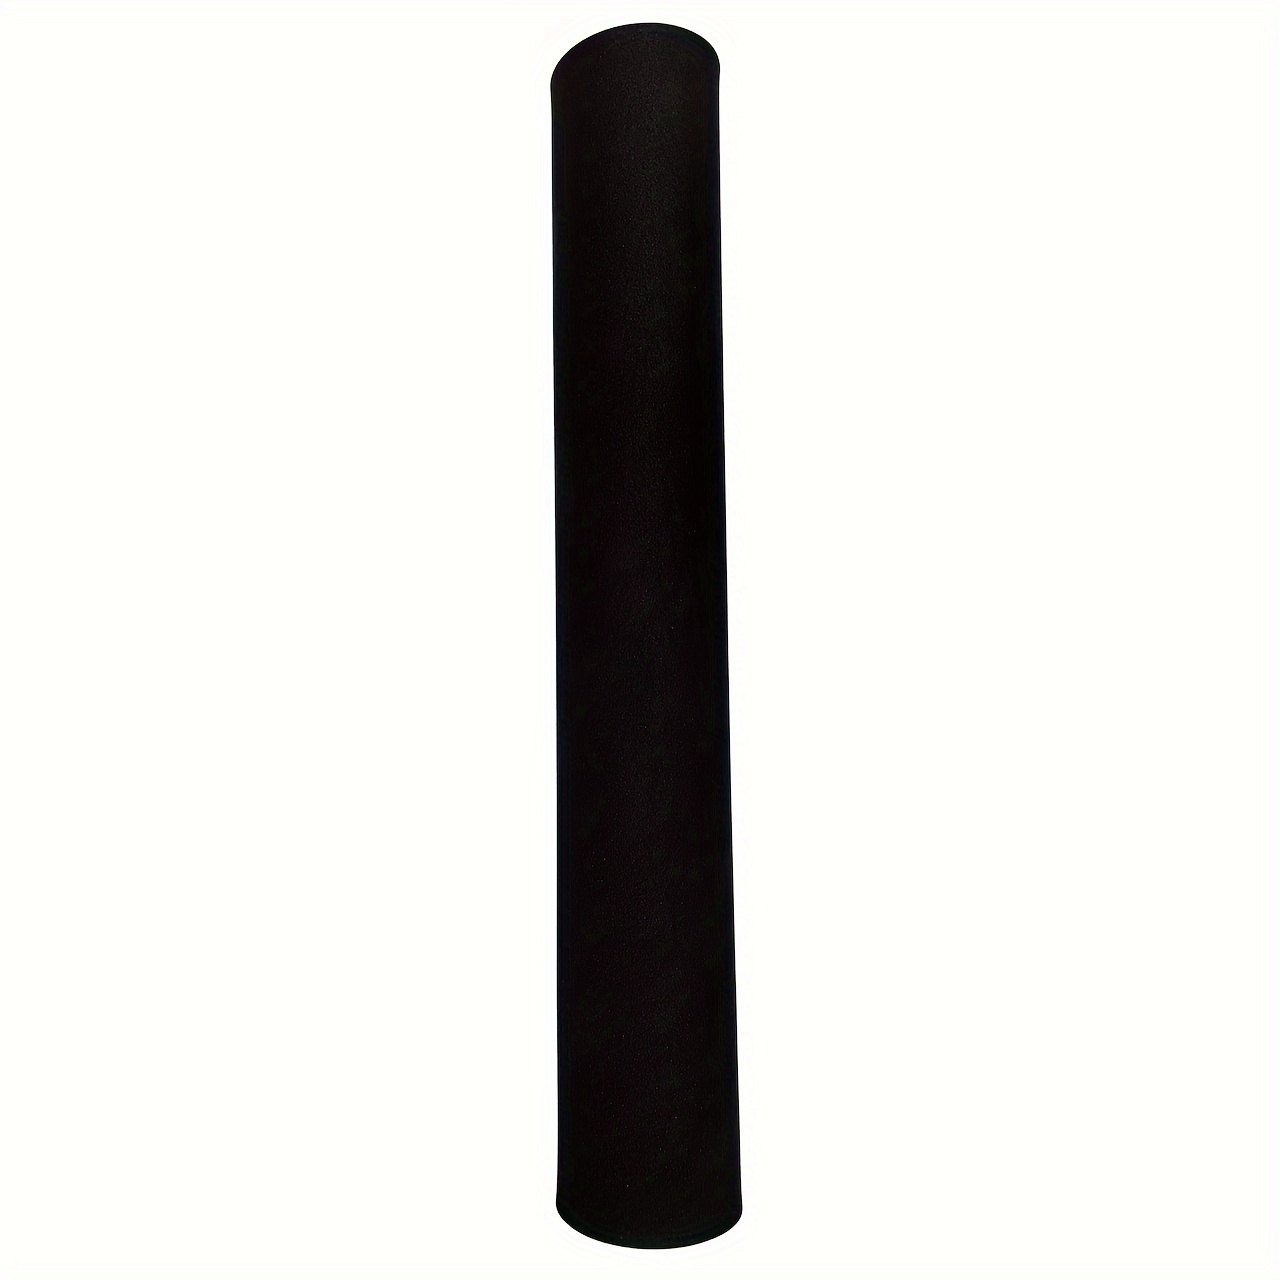 Black Eva Foam Board Thickness Used For Crafts Diy Foam - Temu